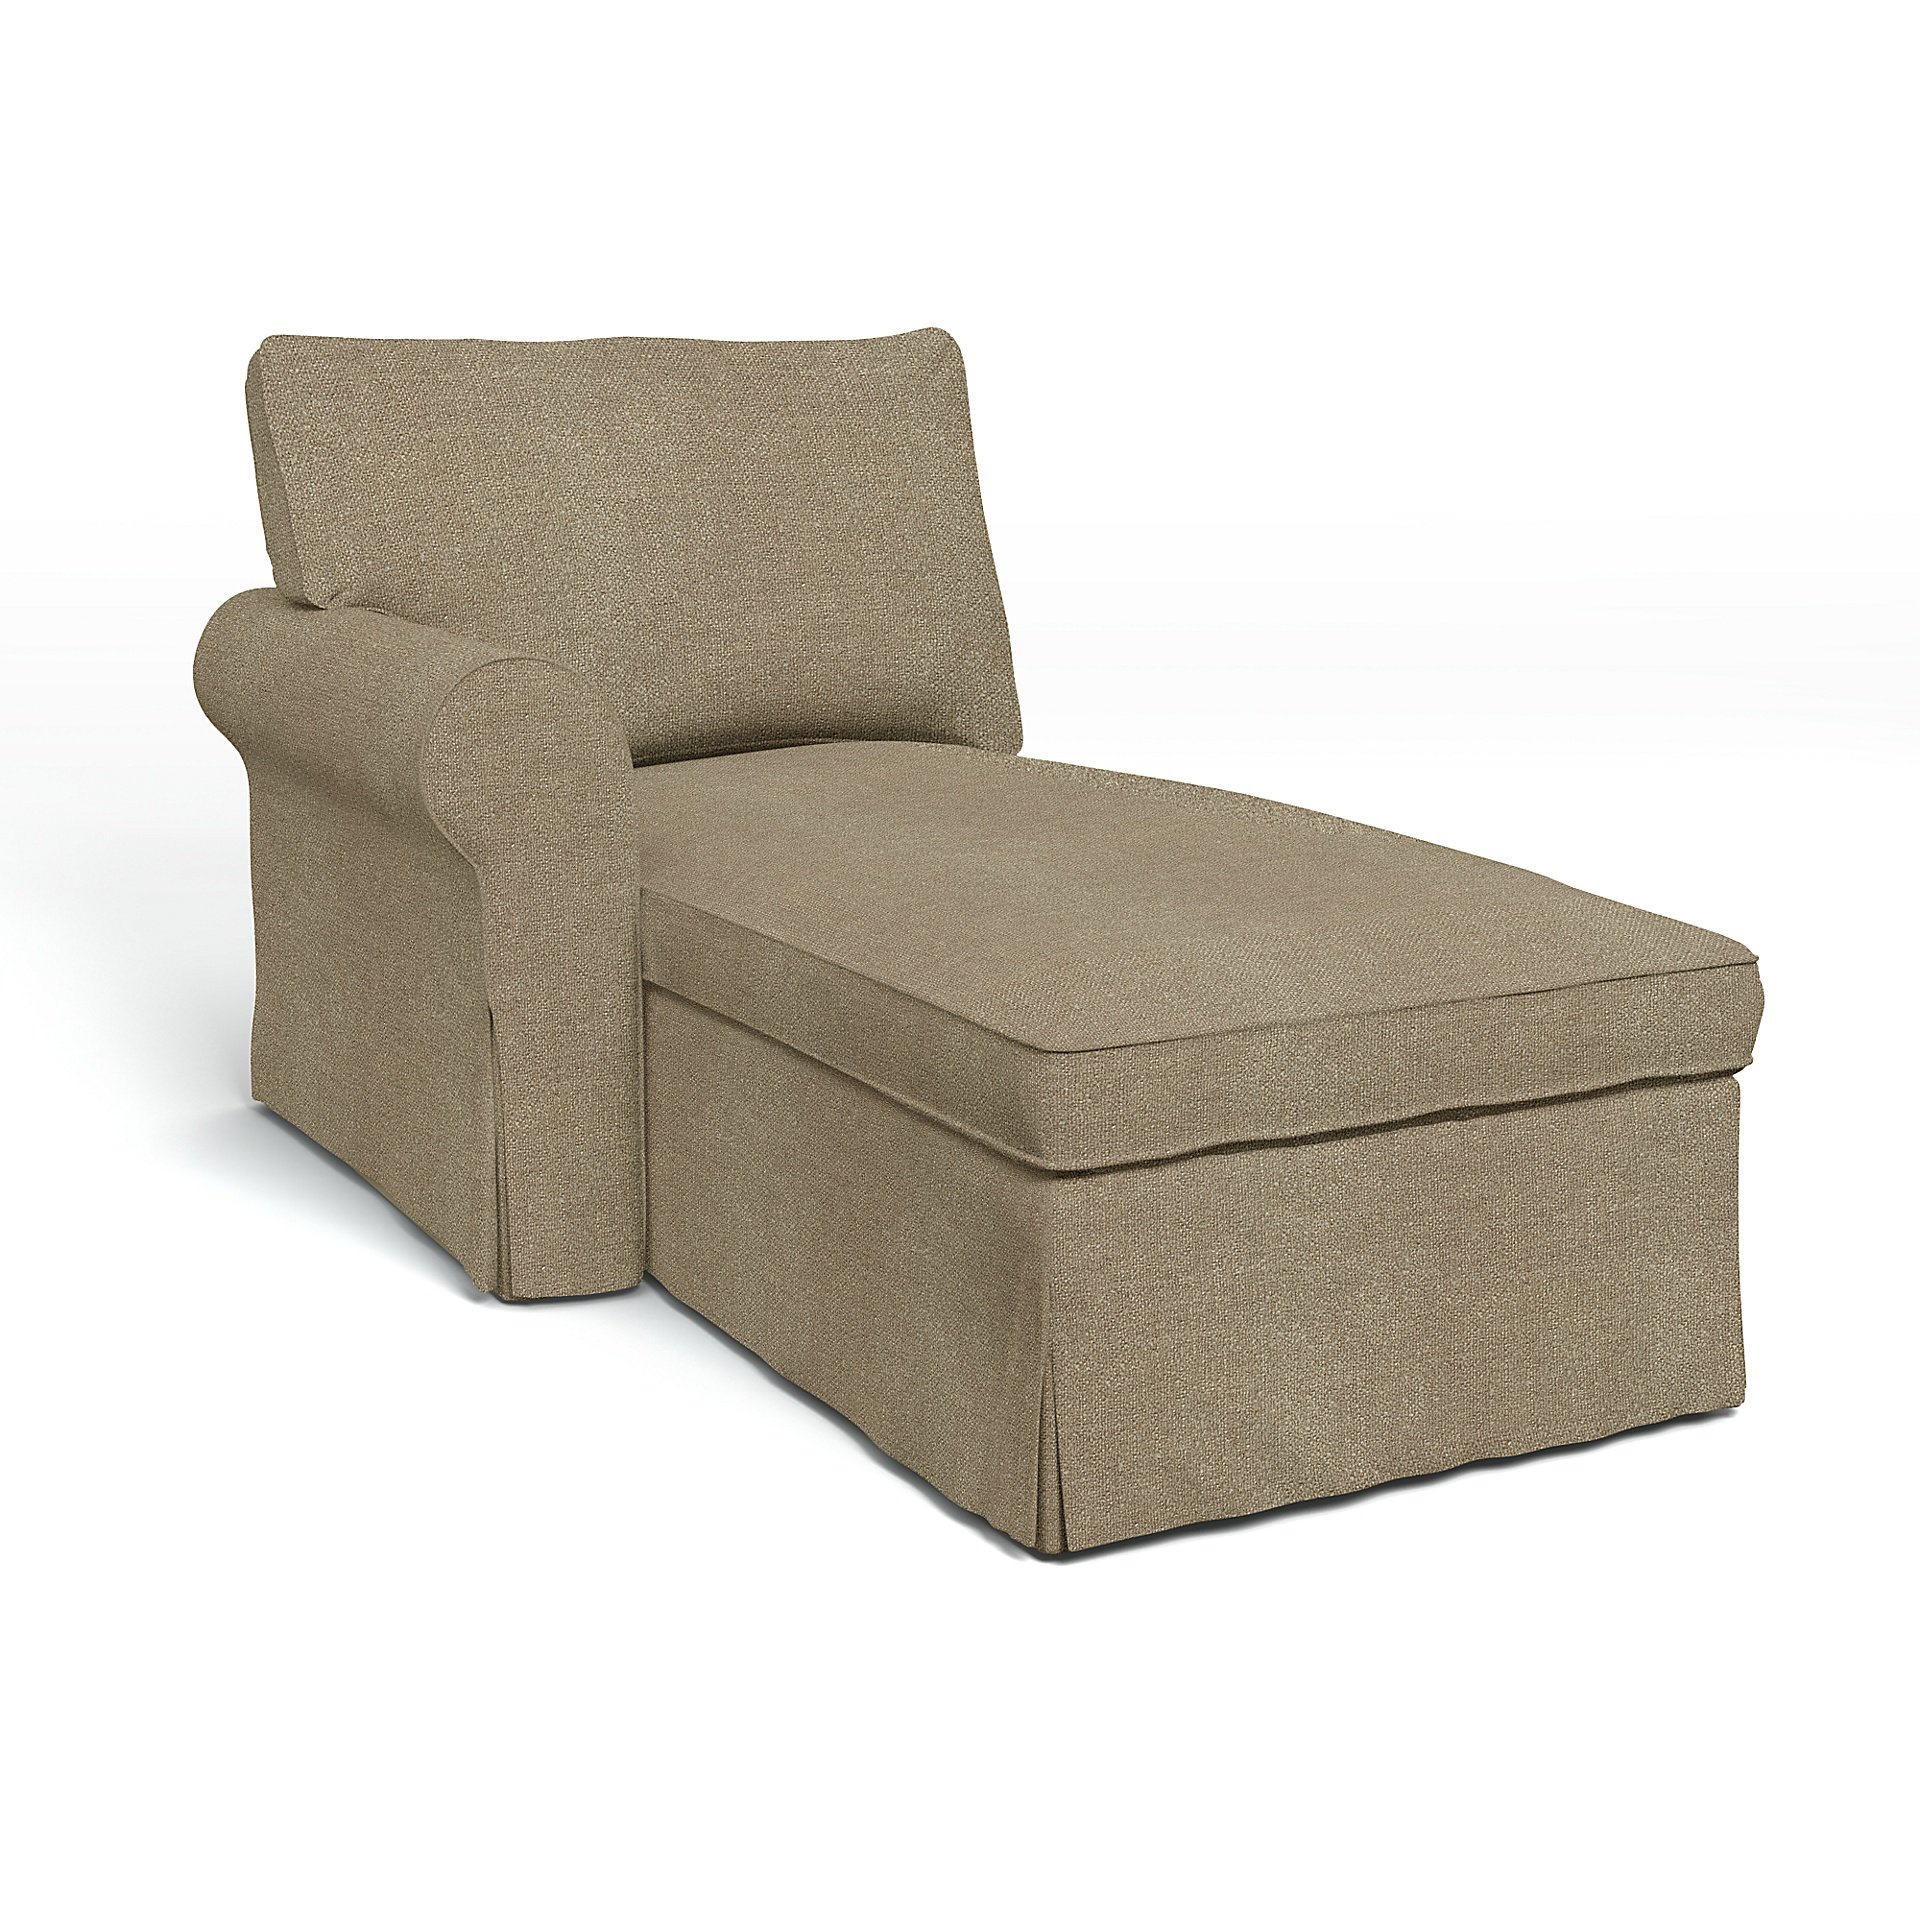 IKEA - Ektorp Chaise with Left Armrest Cover, Pebble, Boucle & Texture - Bemz